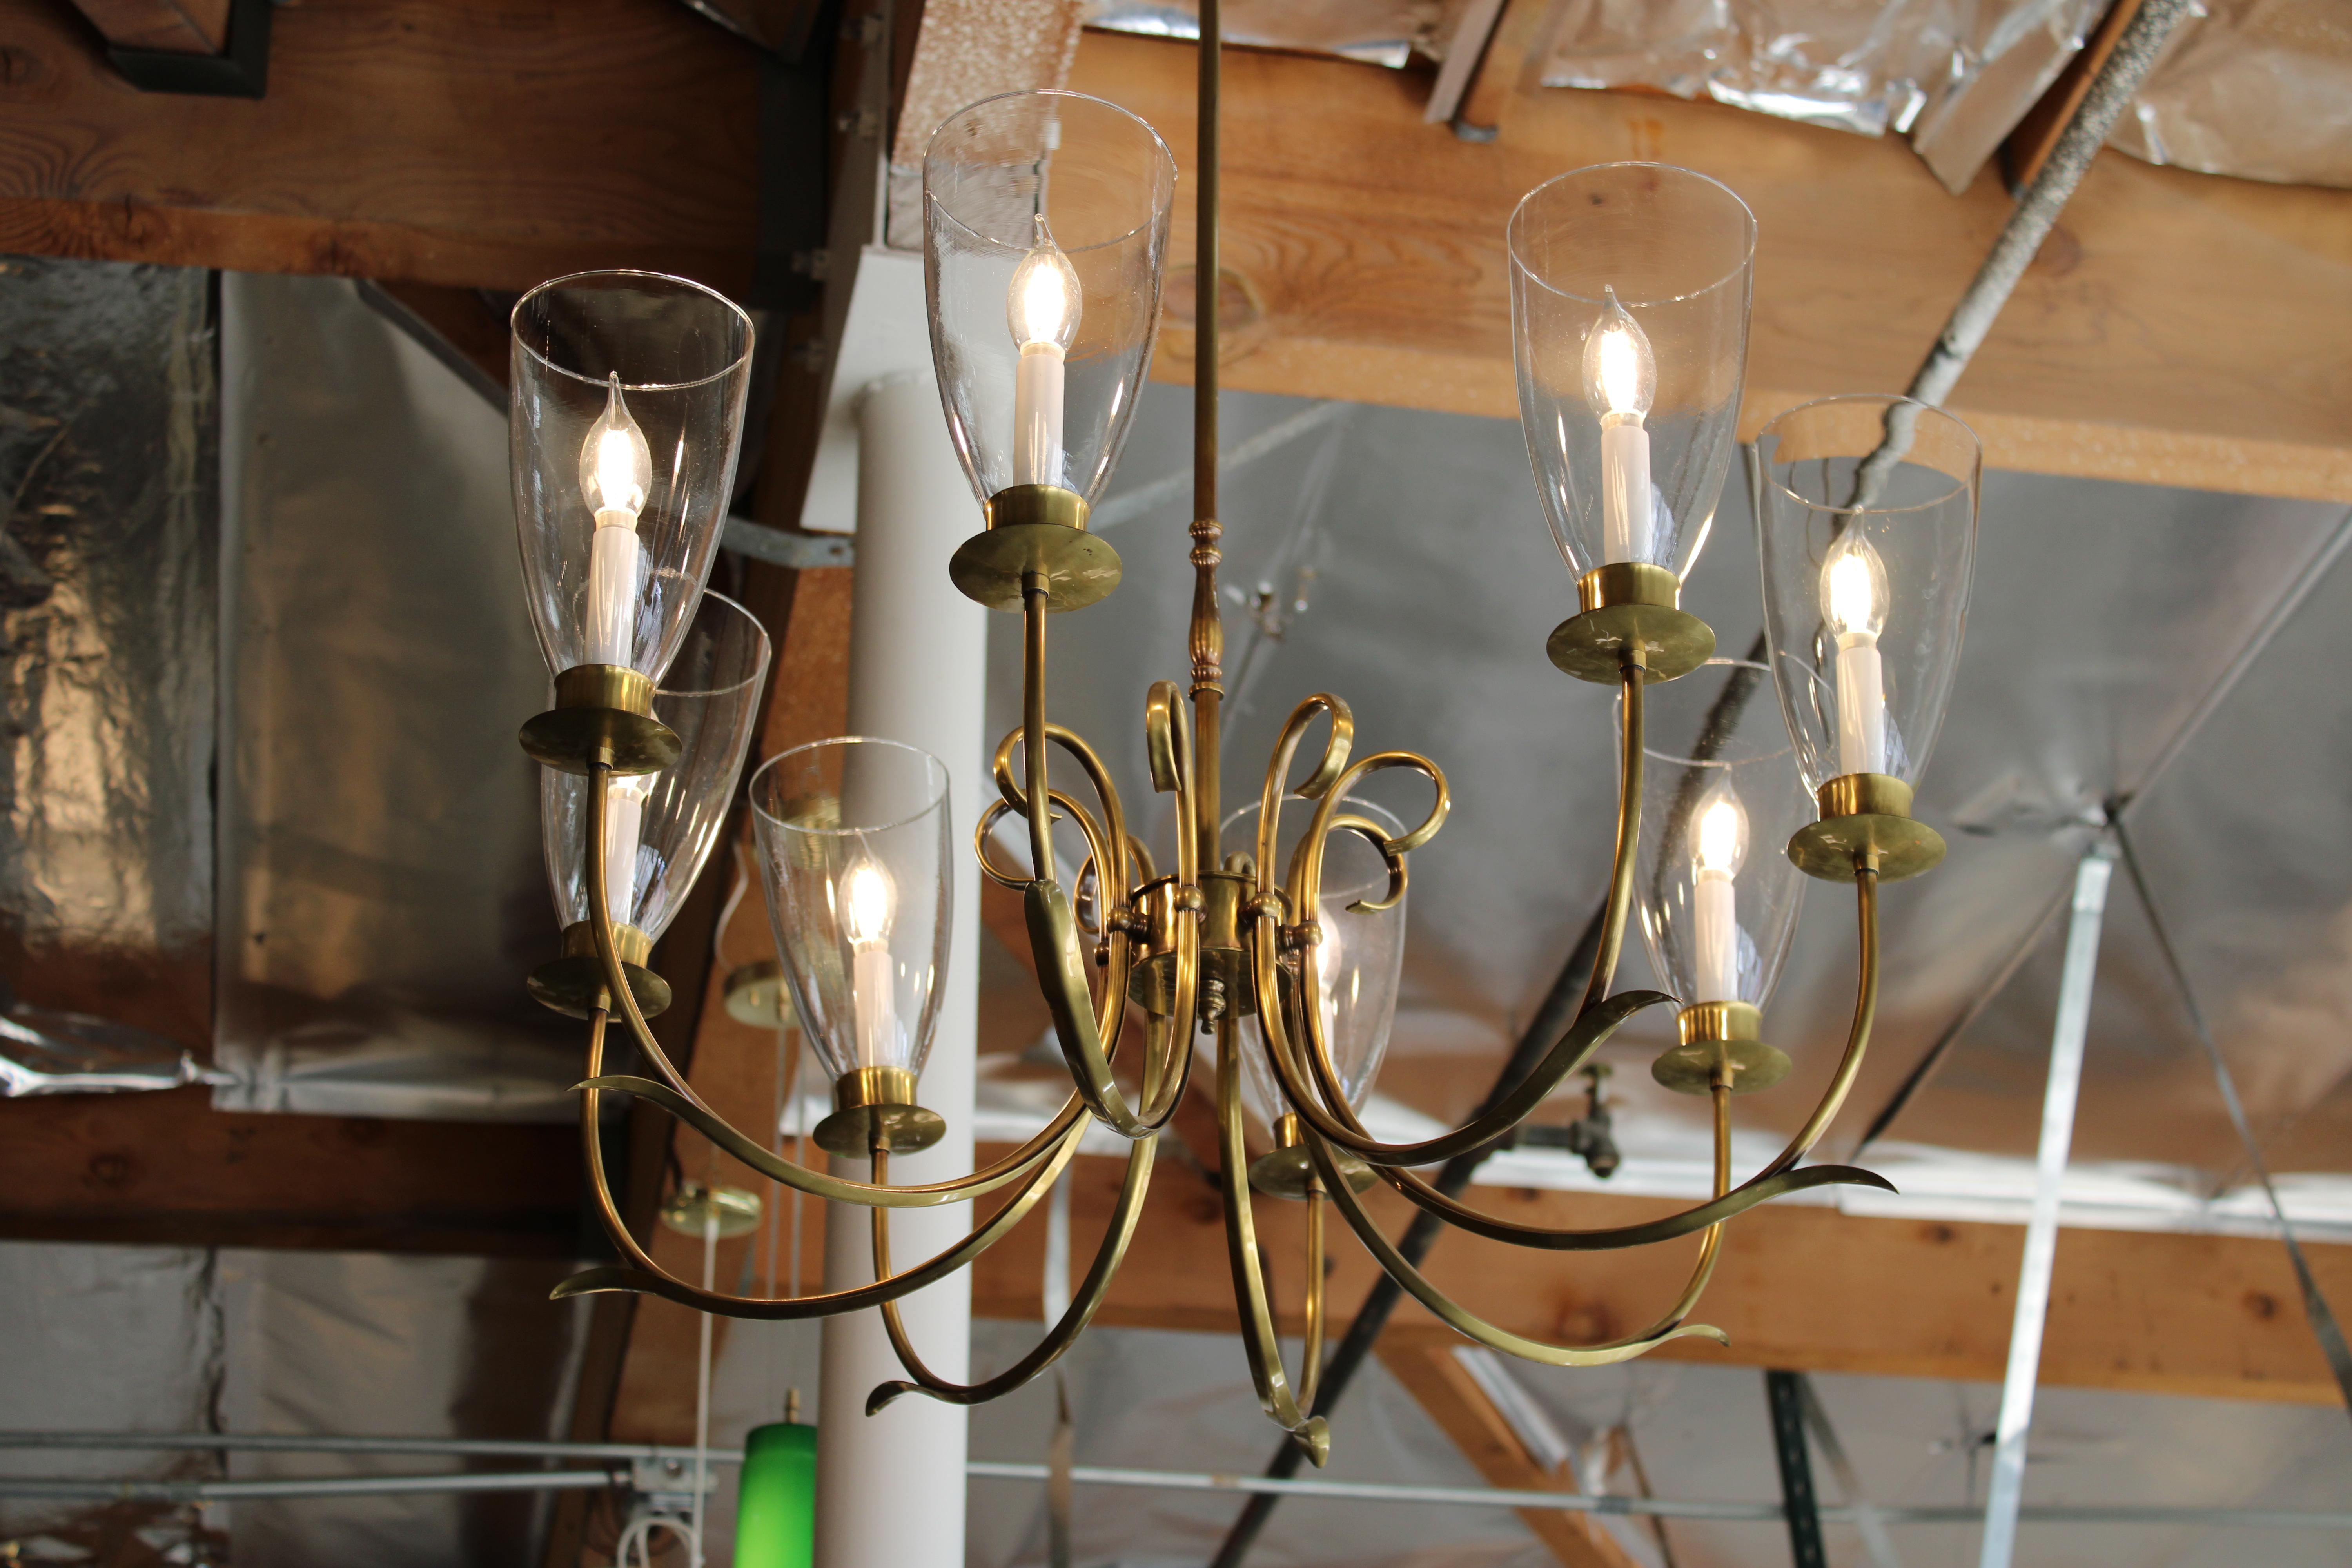 Brass chandelier by Norman Grag made in Manton, California. Chandelier measures 36